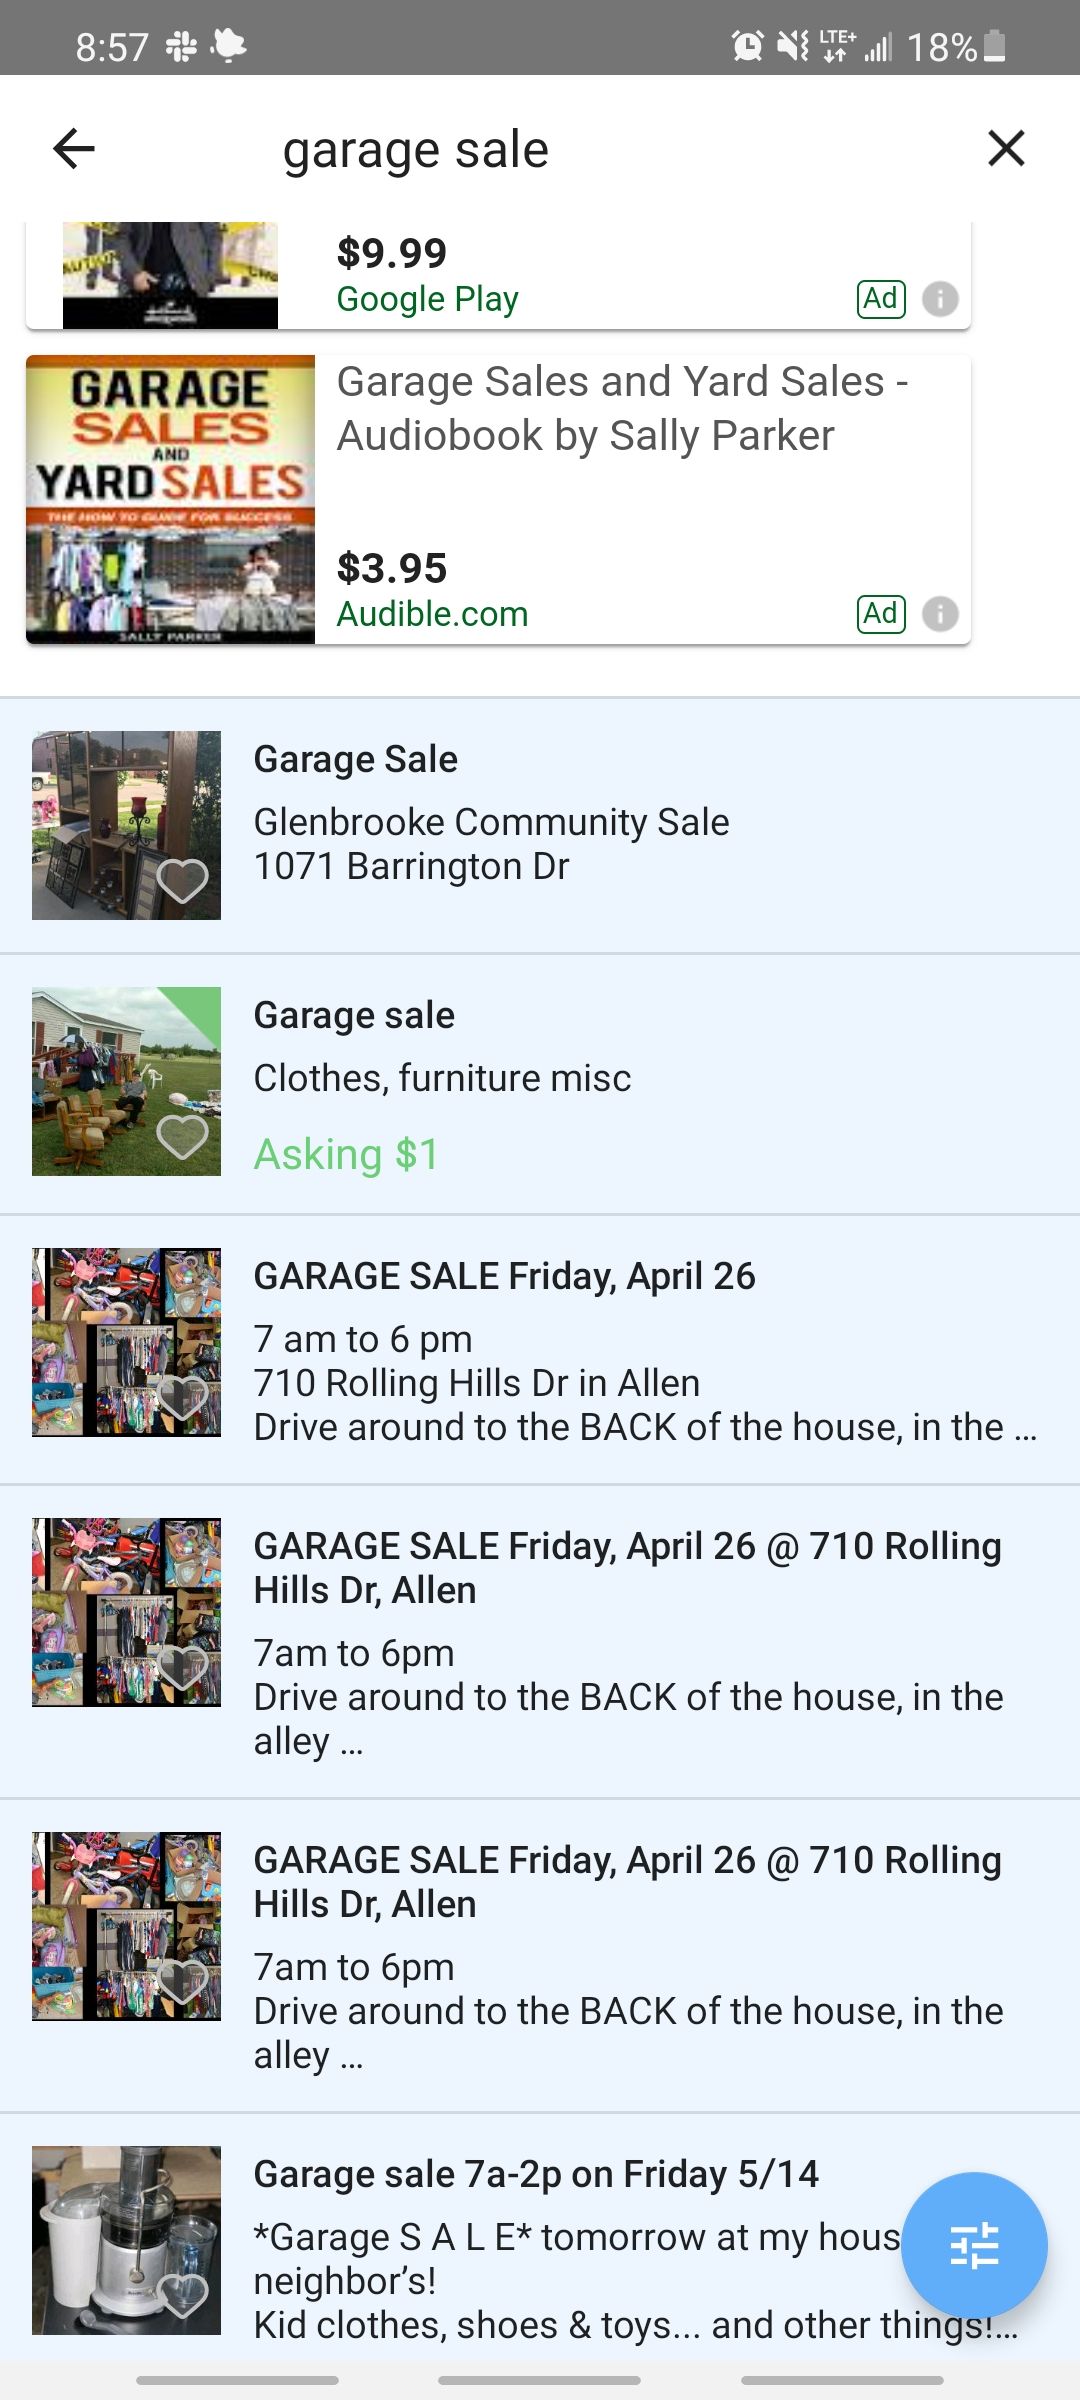 varagesale app showing local garage sales